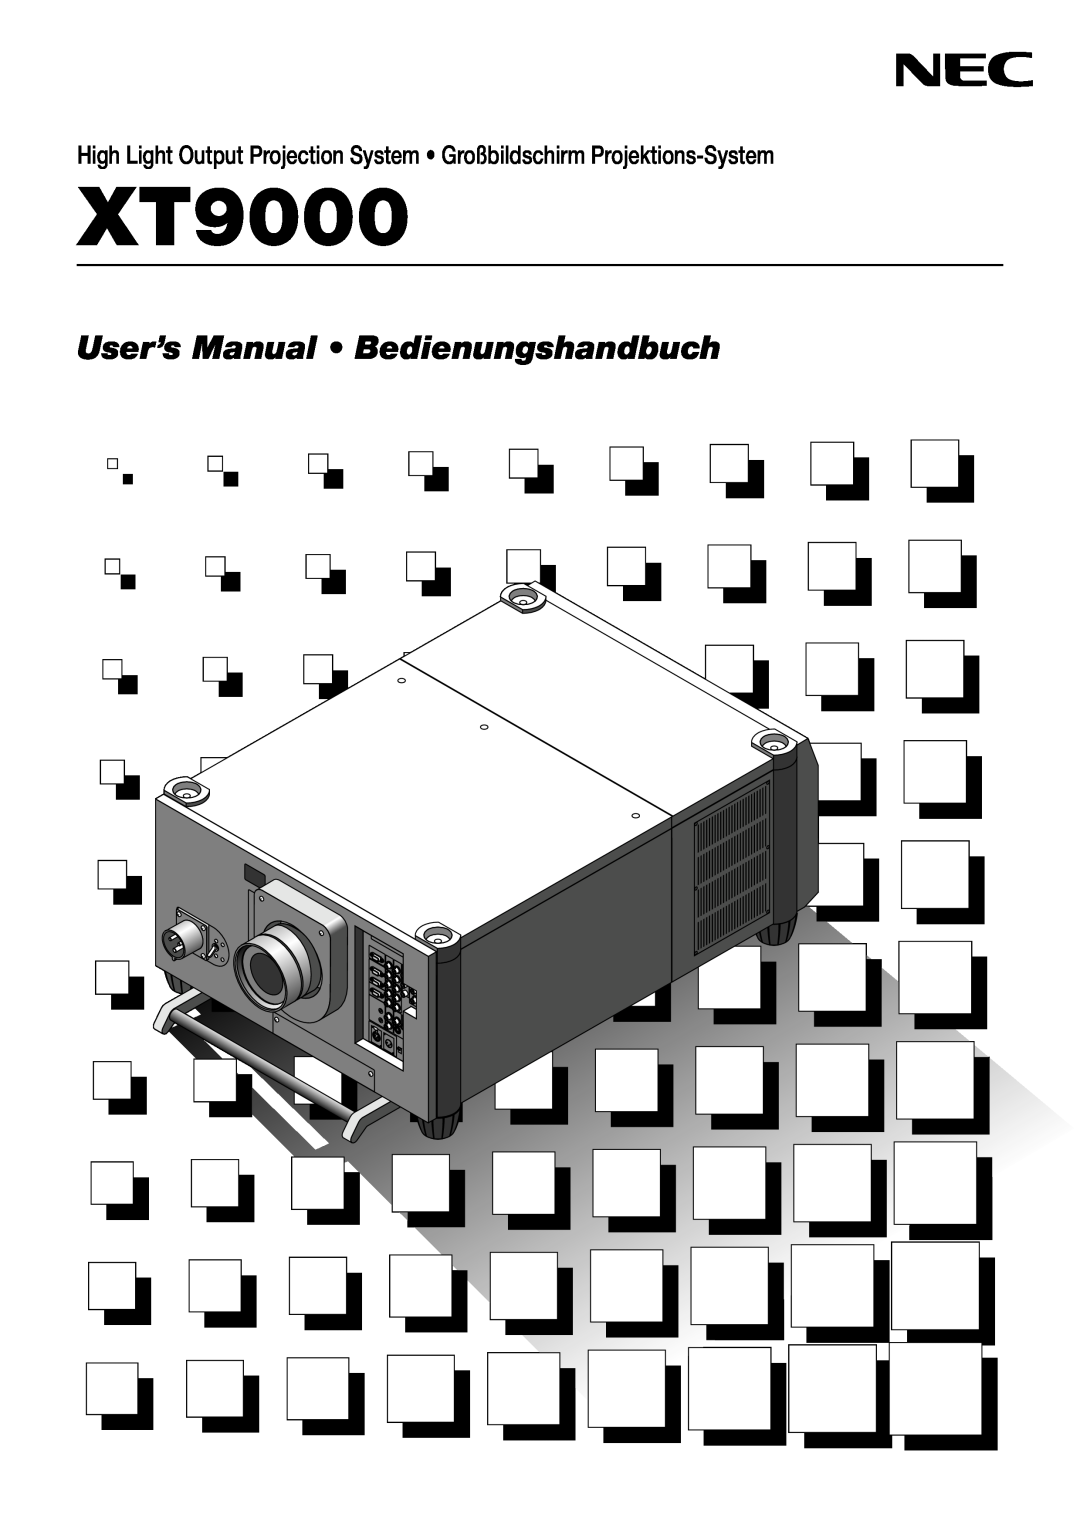 NEC XT9000 user manual User’s Manual Bedienungshandbuch 